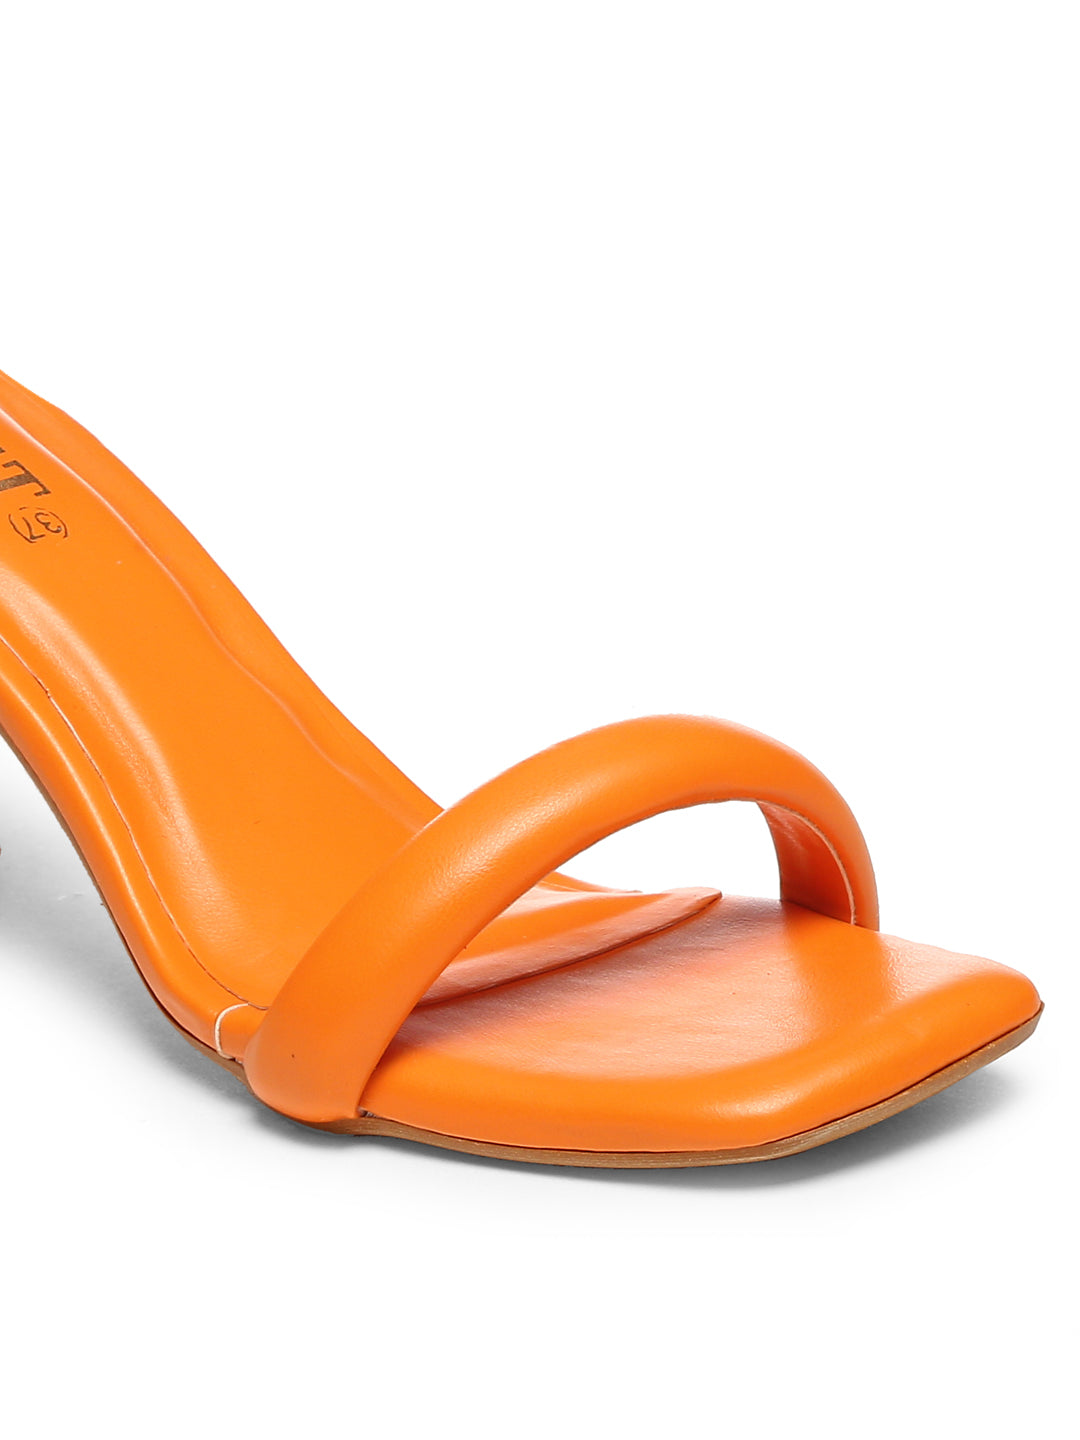 GNIST Orange Chuncky Party Block Heel Sandal